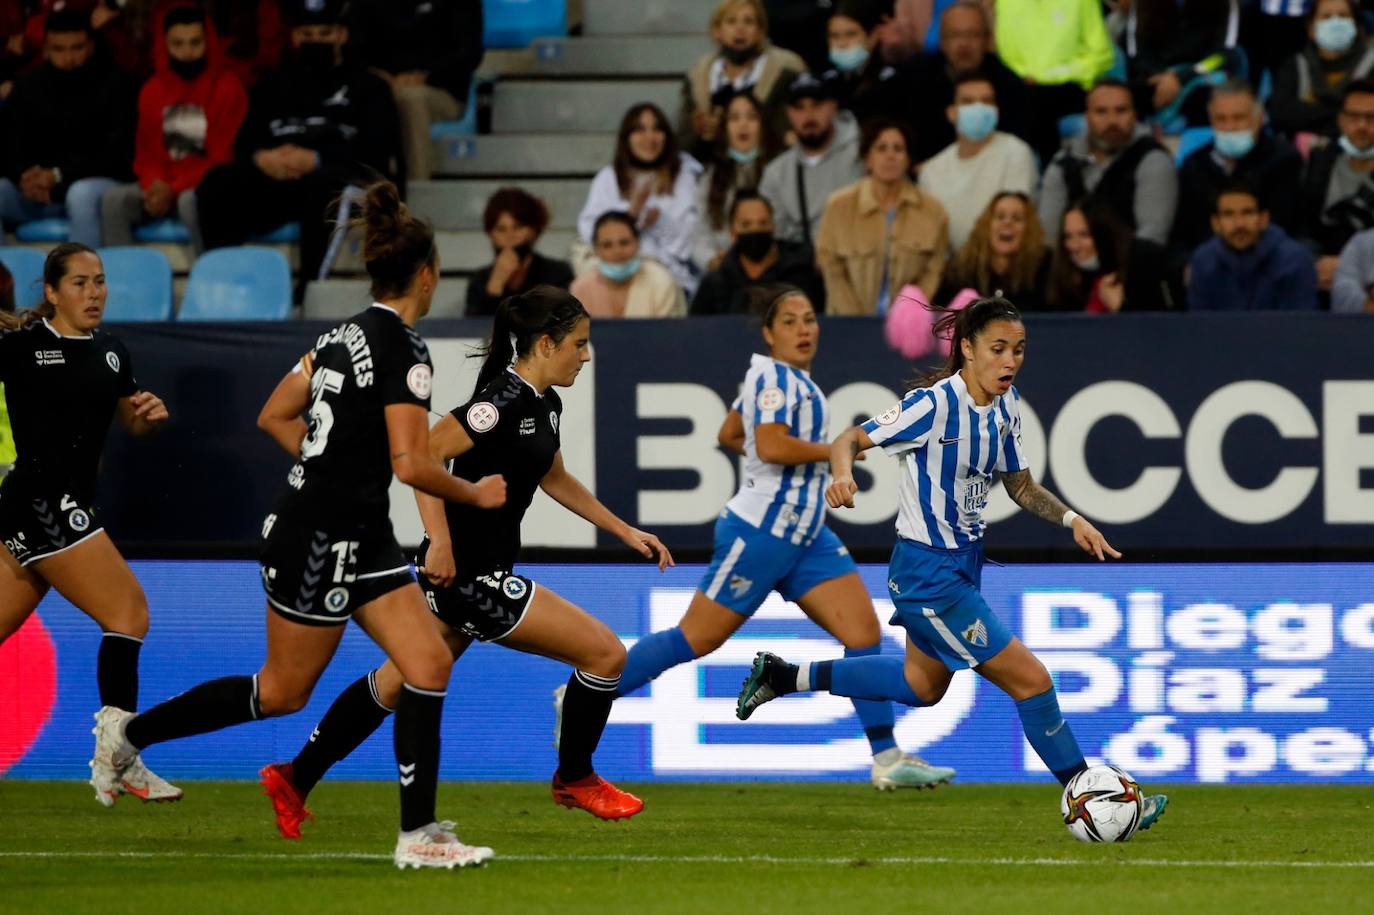 The match at La Rosaleda went to penalties, with Malaga beating Zaragoza 4-2